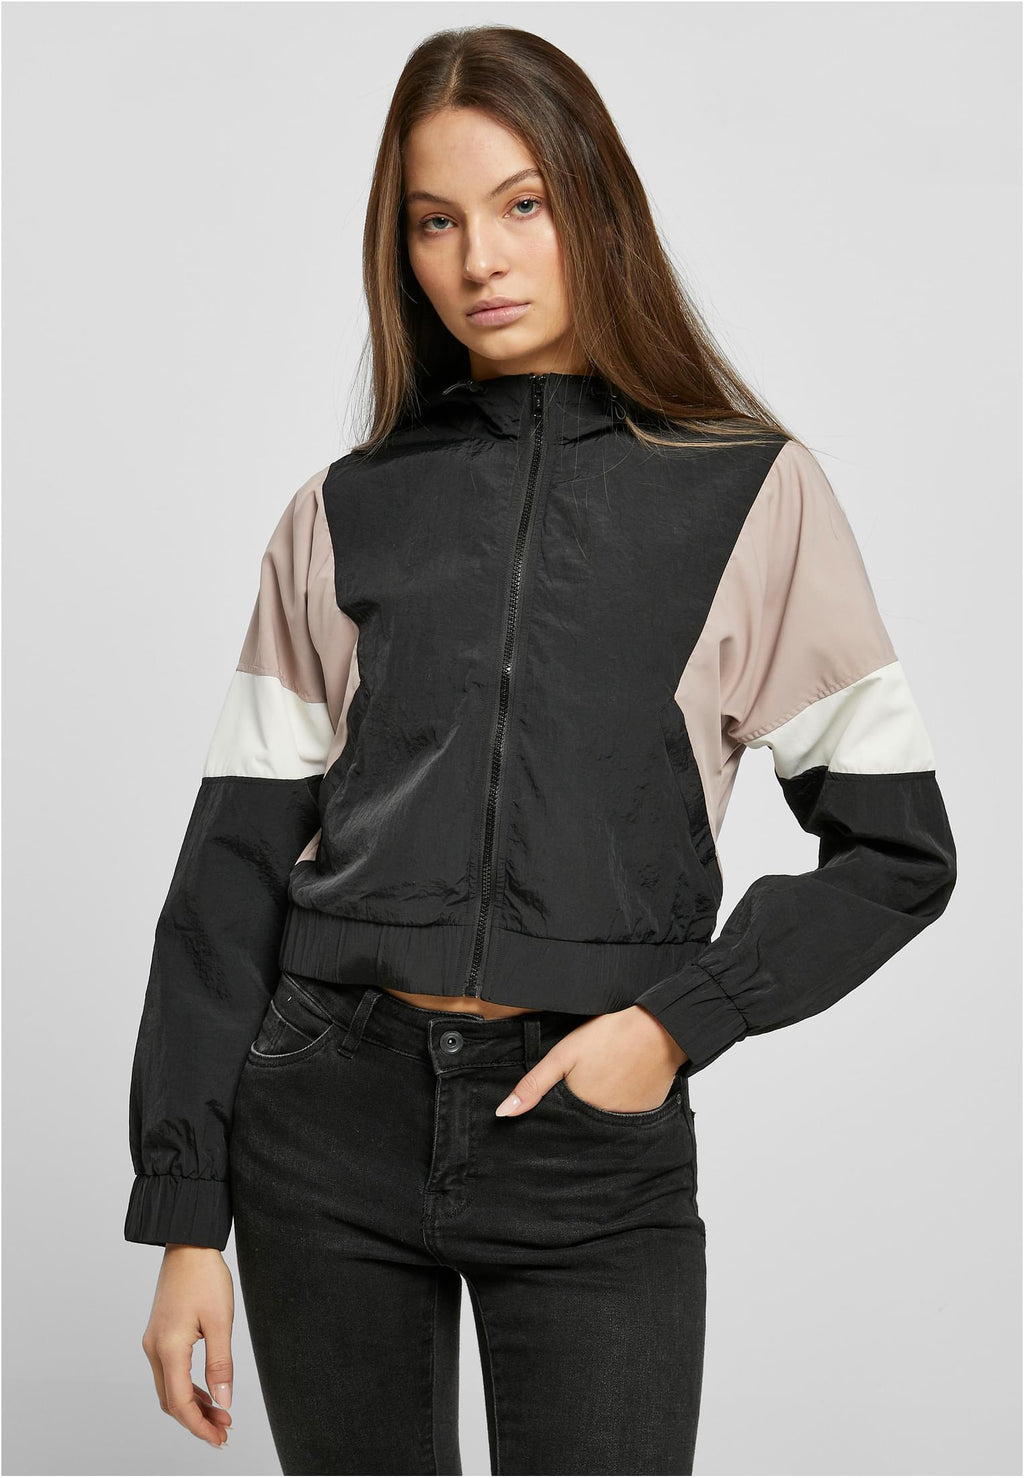 Urban Classics Ladies Short 3 Tone Crinkle Jacket Black